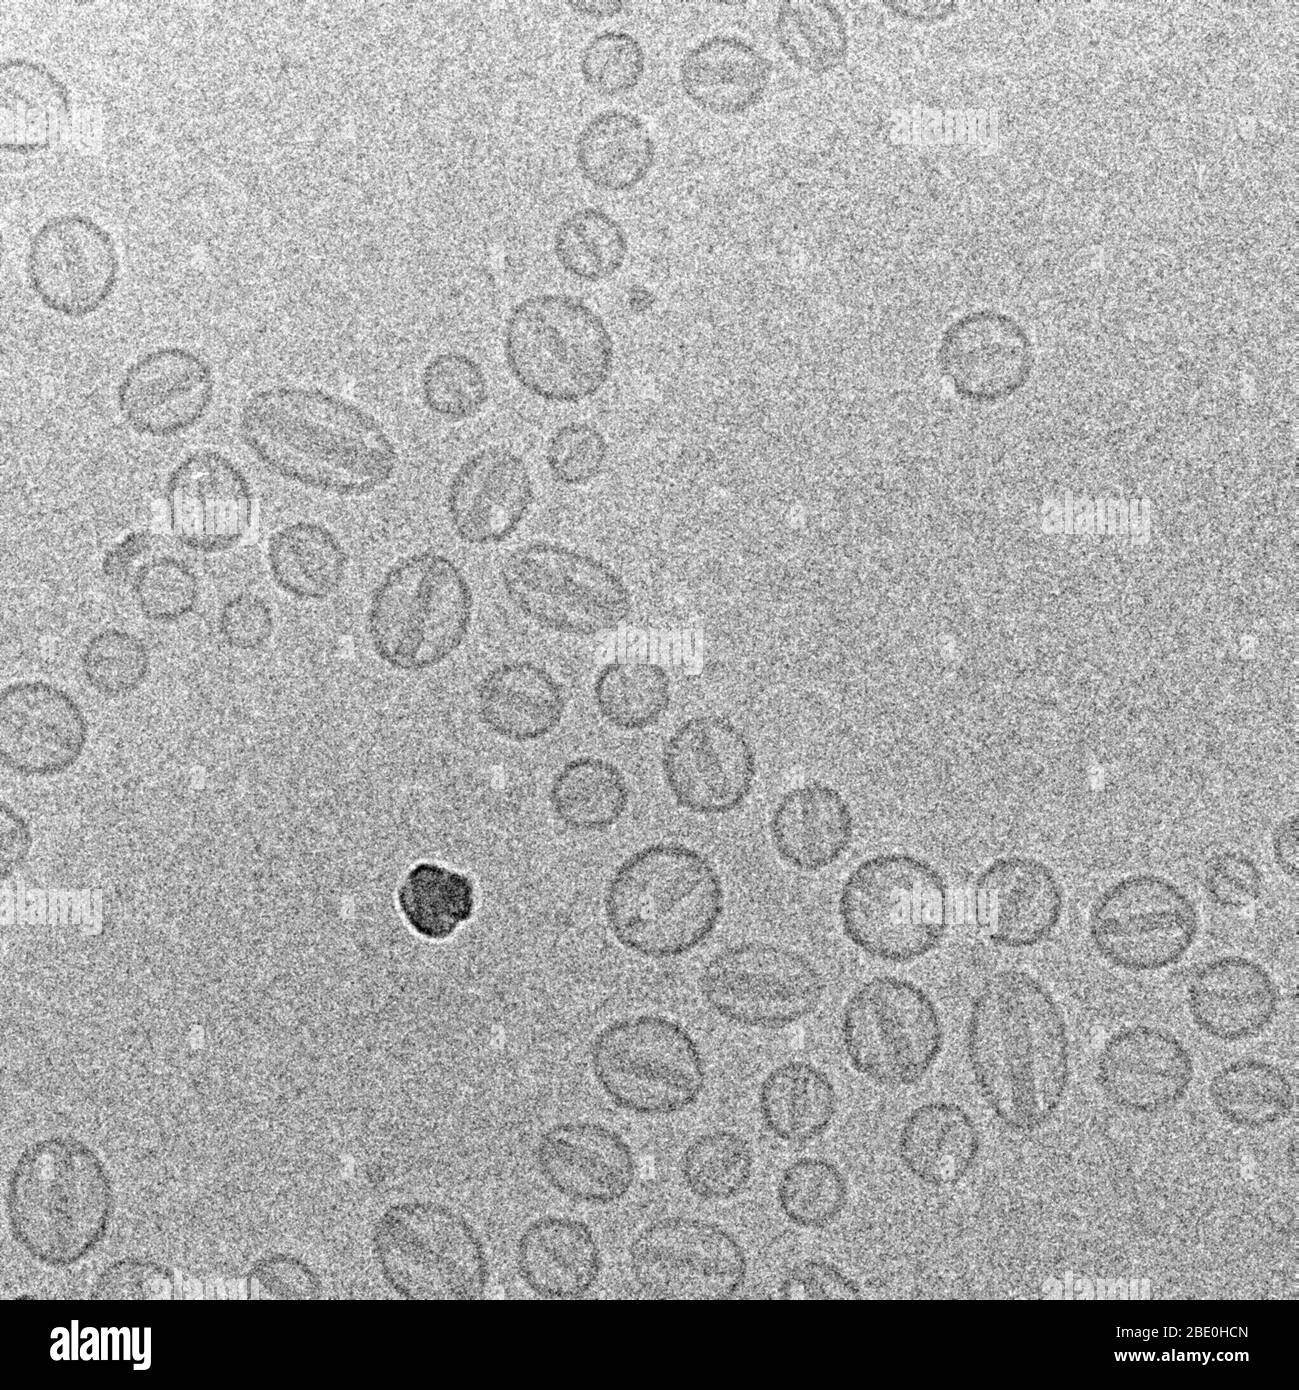 Transmission Electron Micrograph (TEM) des Chemotherapeutika Doxorubicin in Liposom, Handelsname Doxil. Vergrößerung unbekannt. Stockfoto